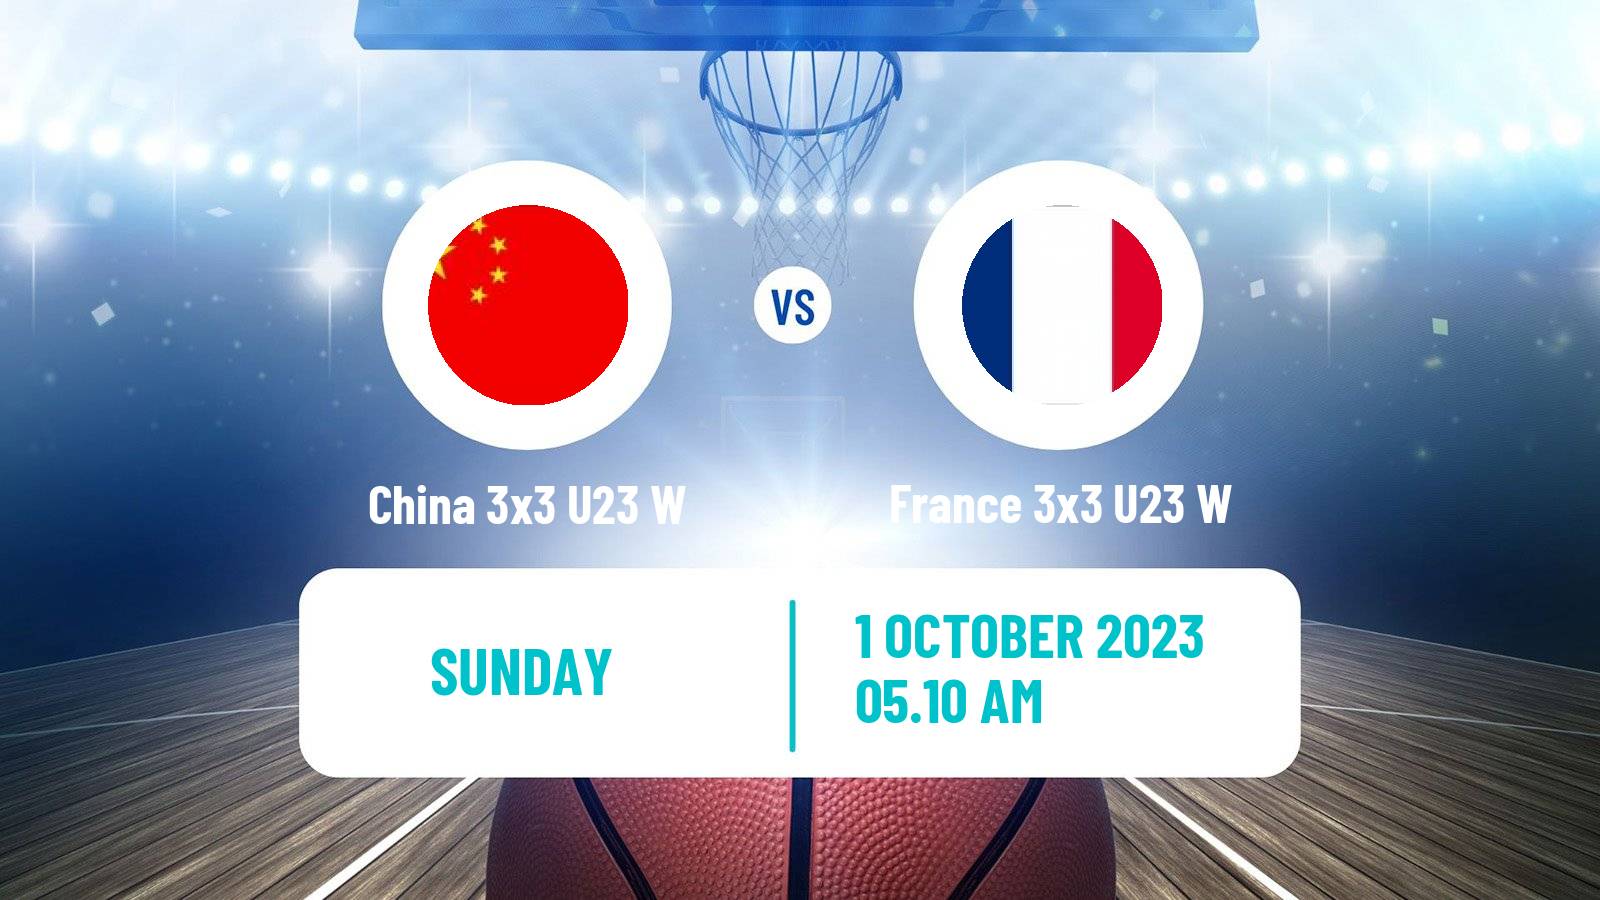 Basketball World Cup Basketball 3x3 U23 Women China 3x3 U23 W - France 3x3 U23 W